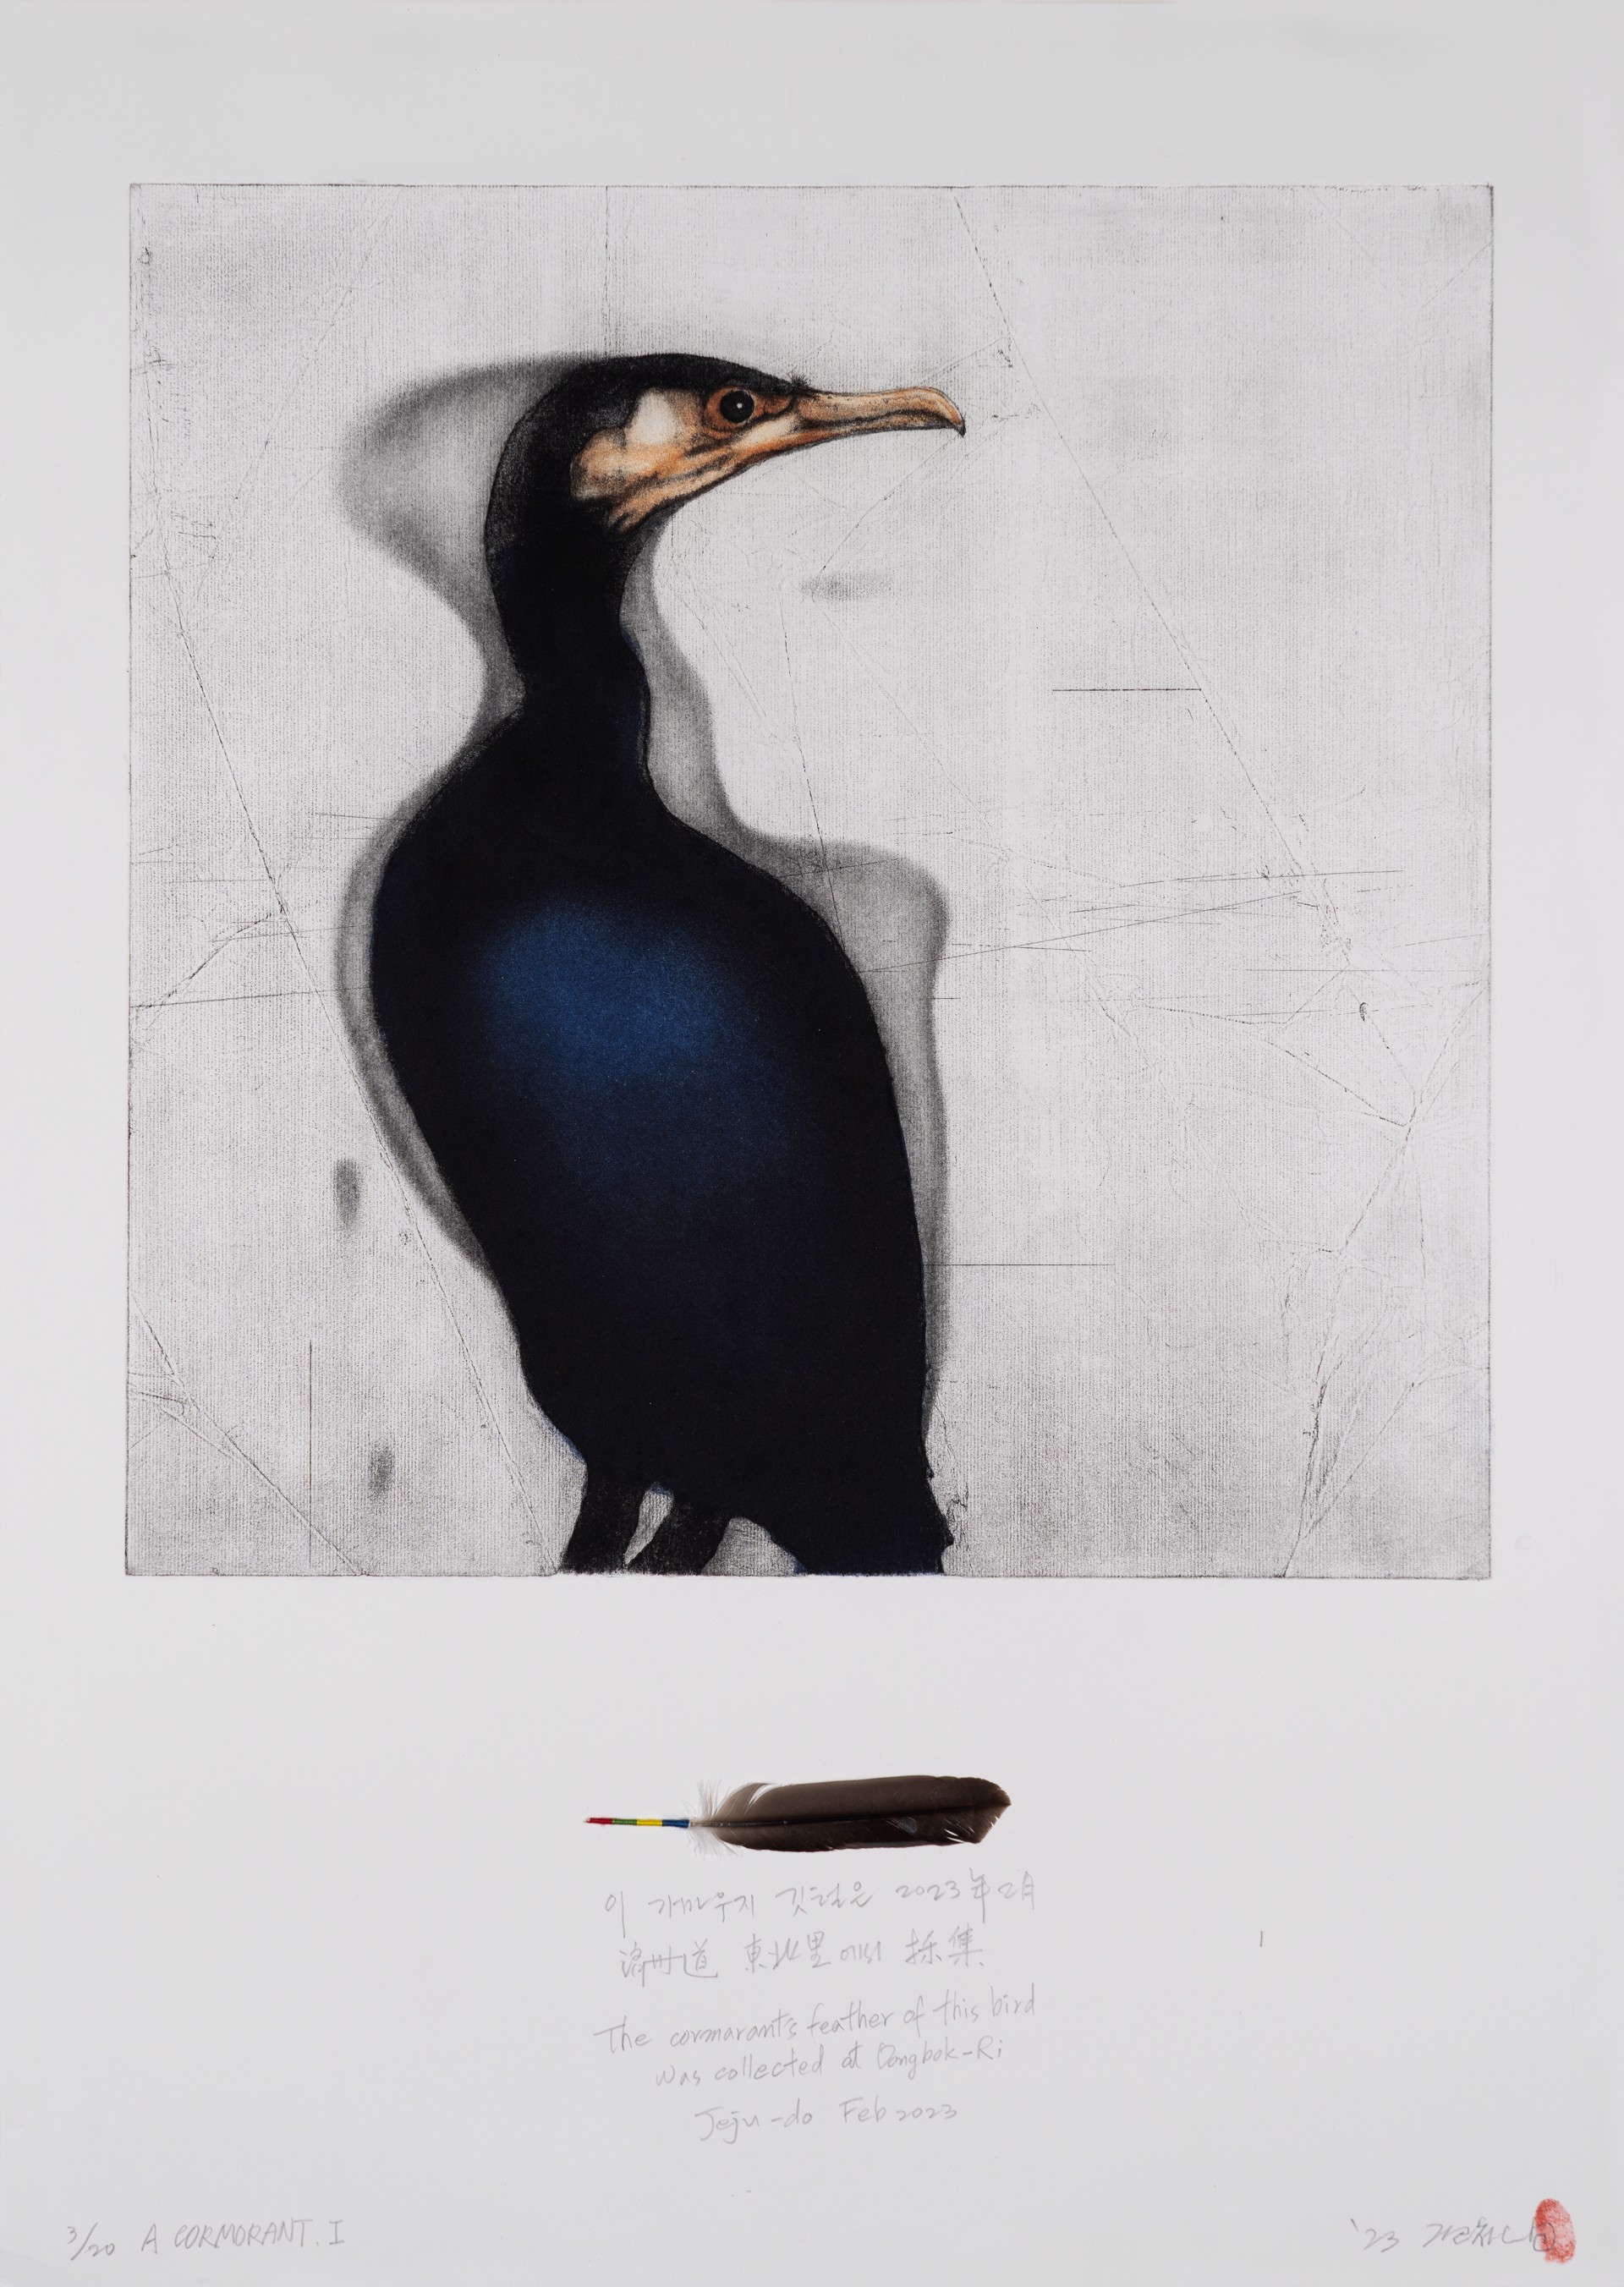 A Cormorant I by Gilchun Koh